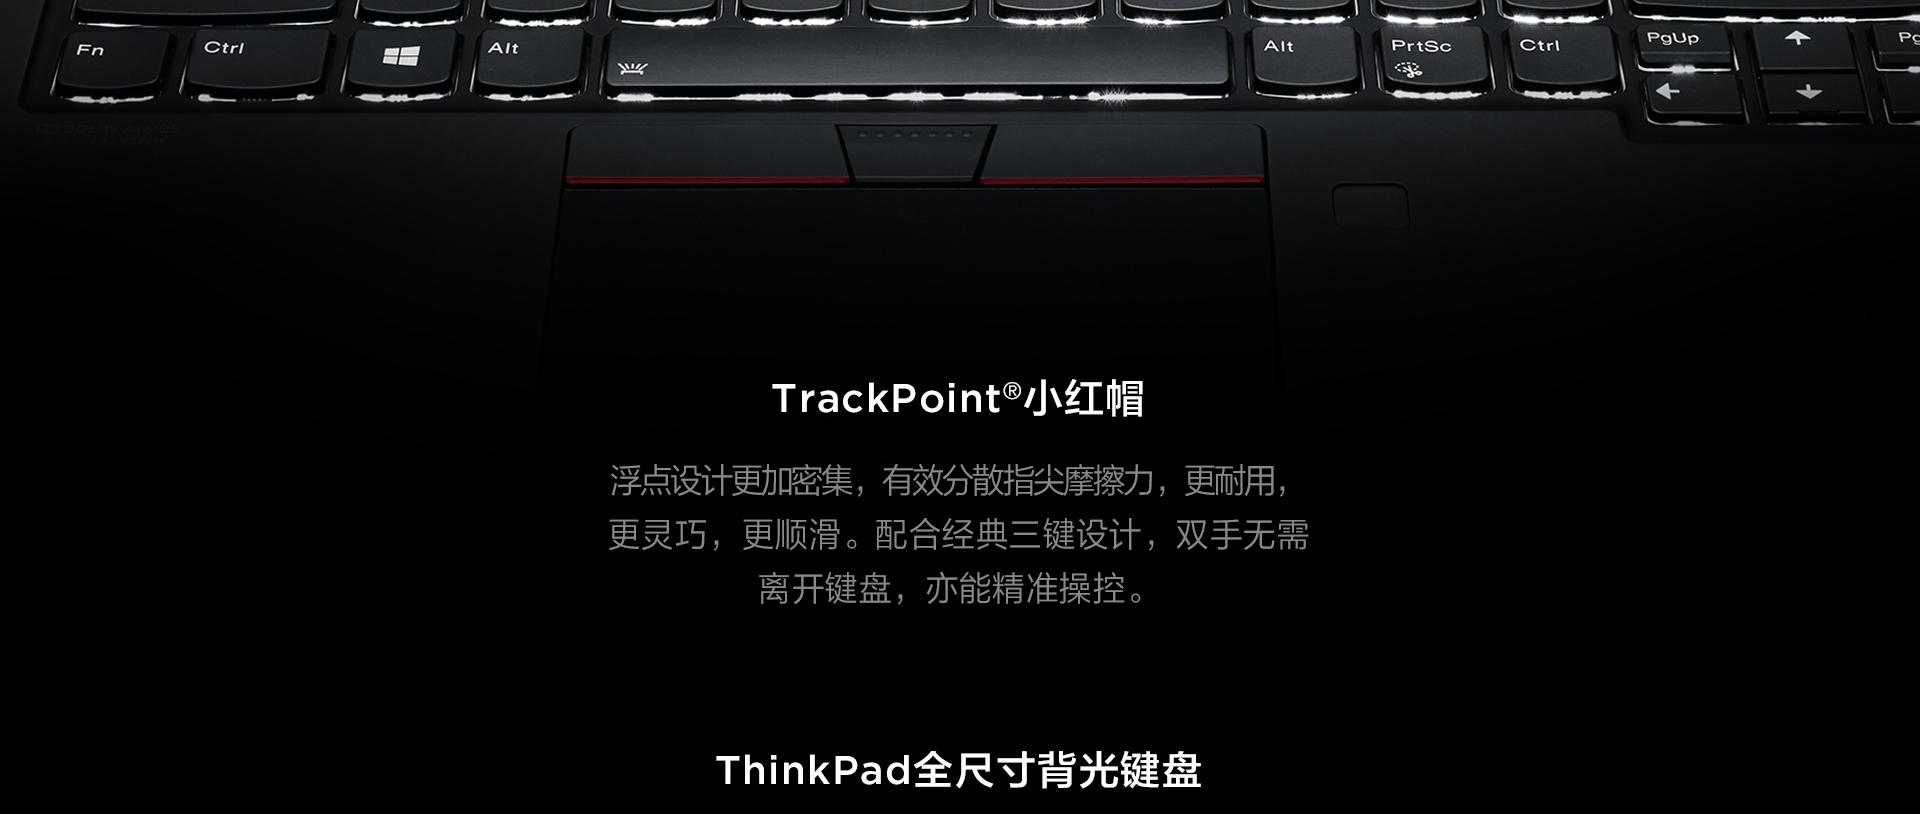 ThinkPad X1 carbon 2019真机图片